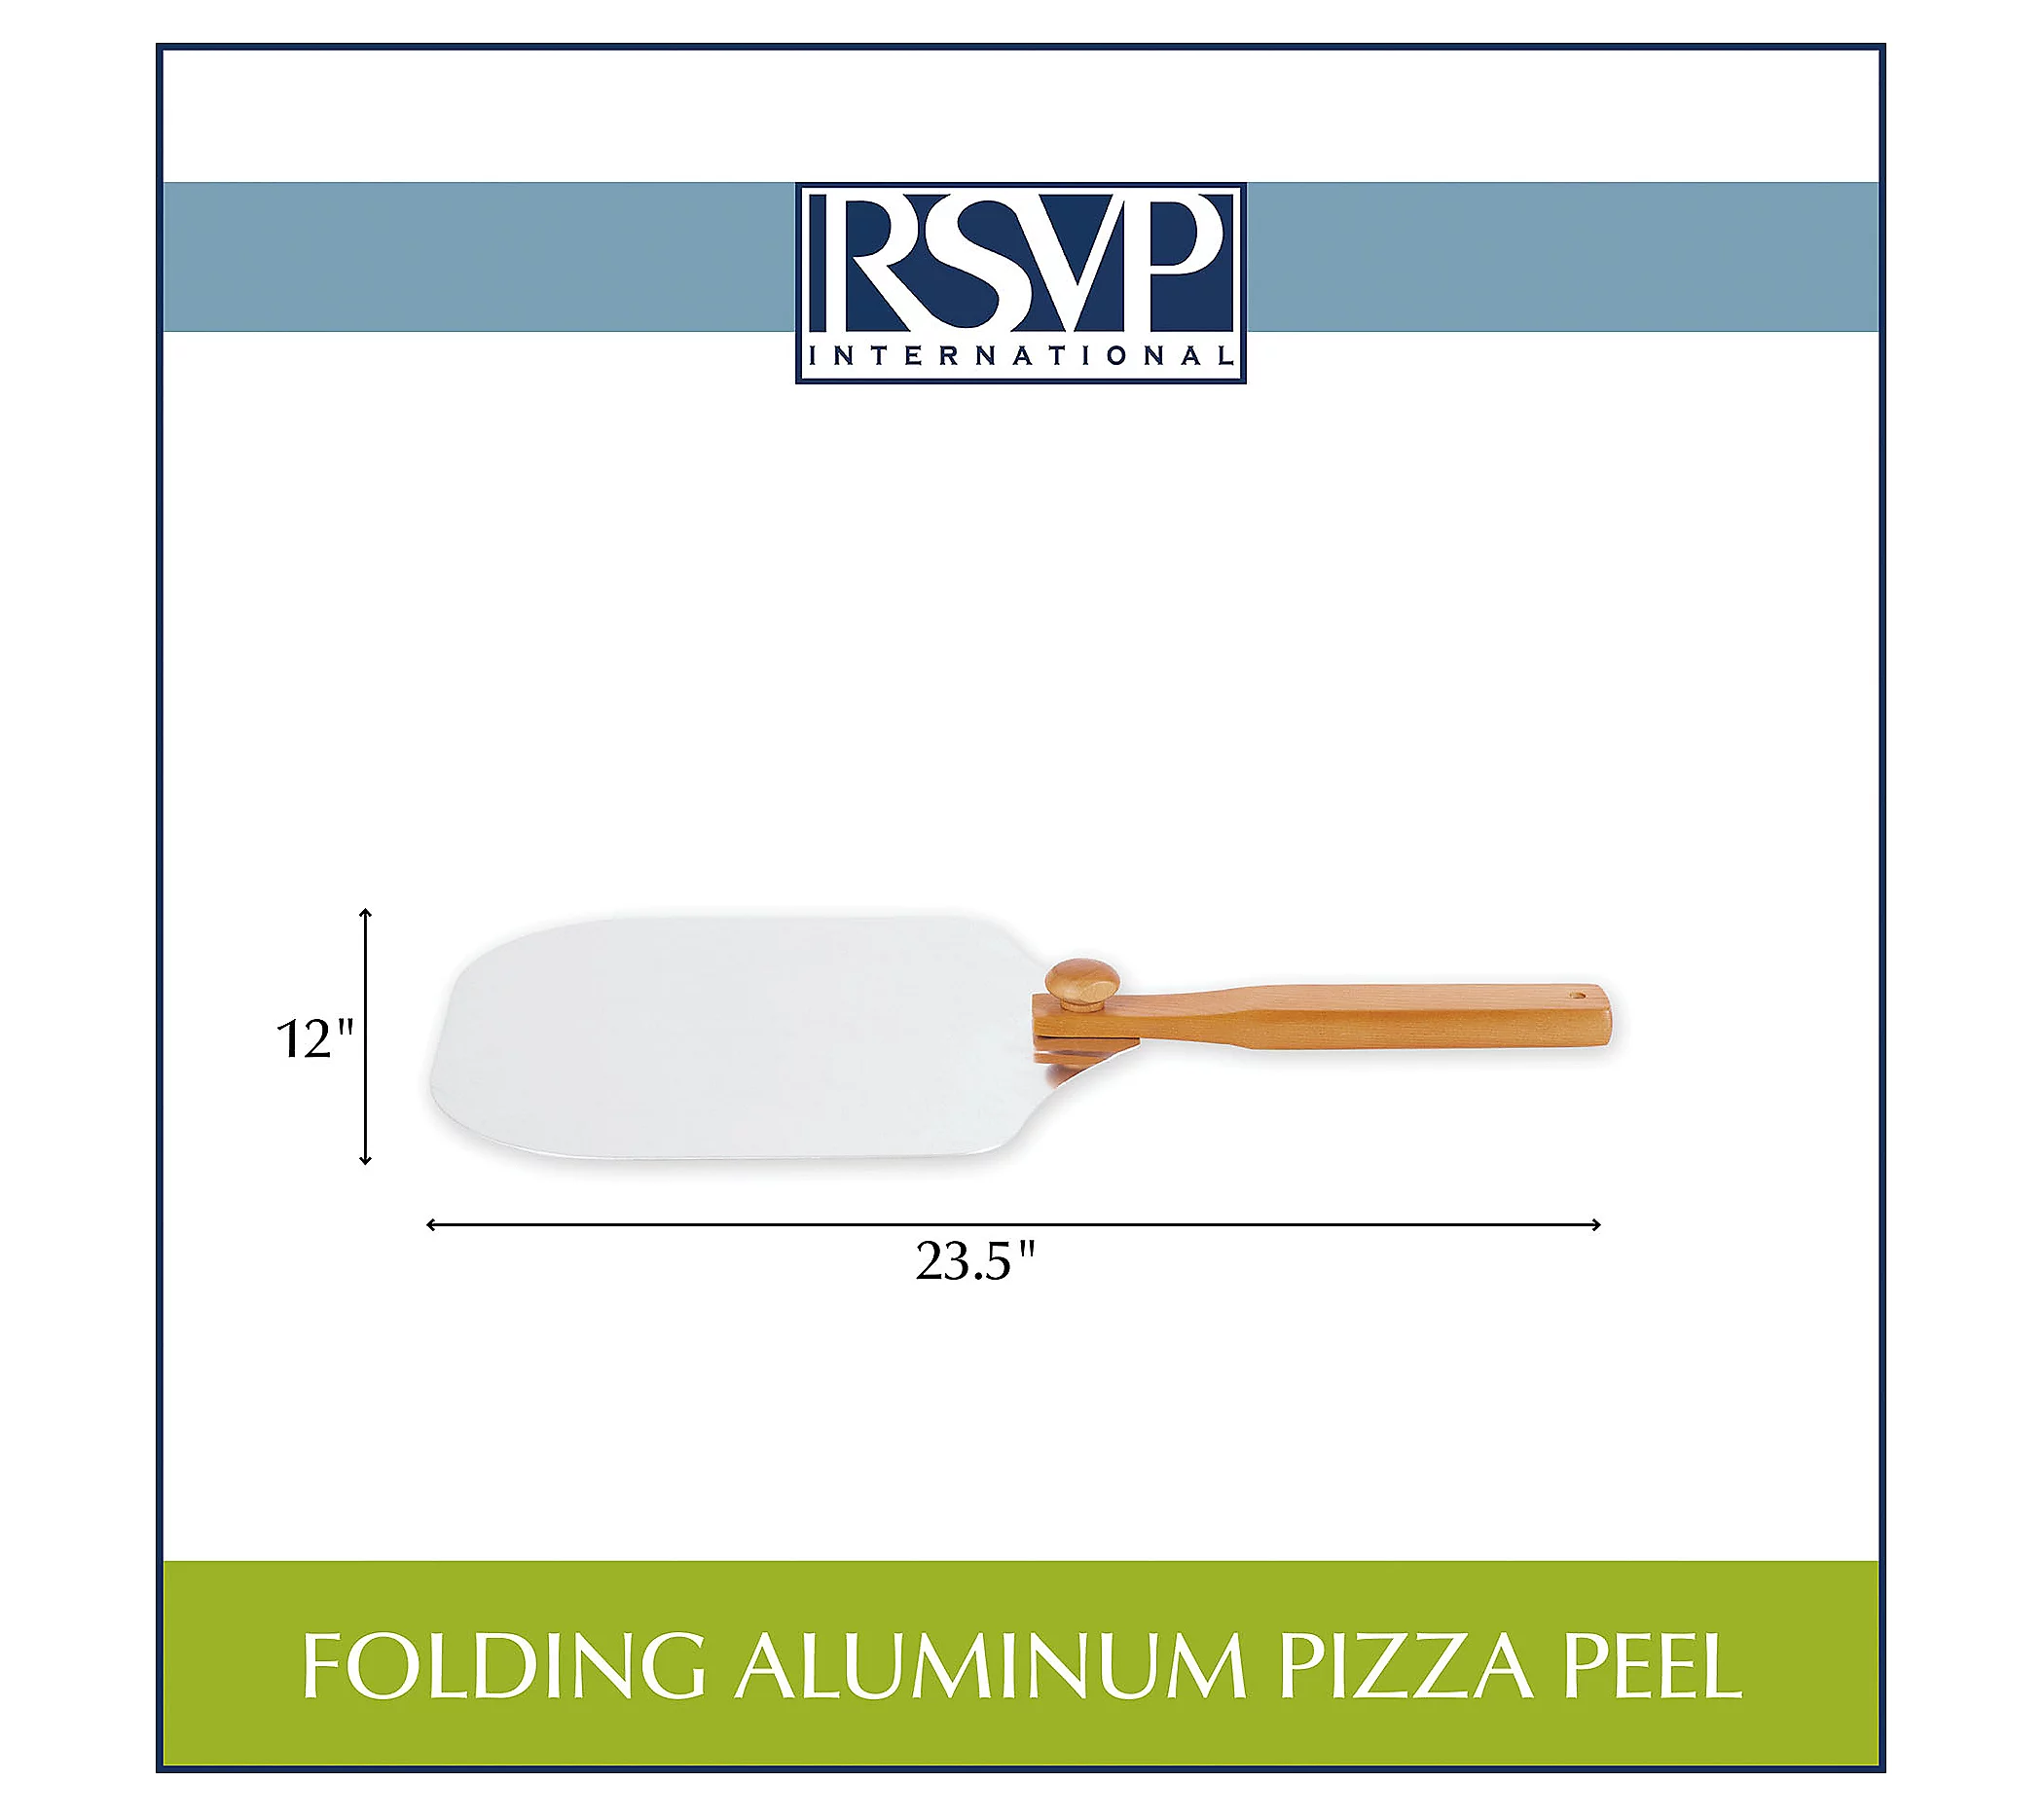 RSVP Folding Aluminum Pizza Peel